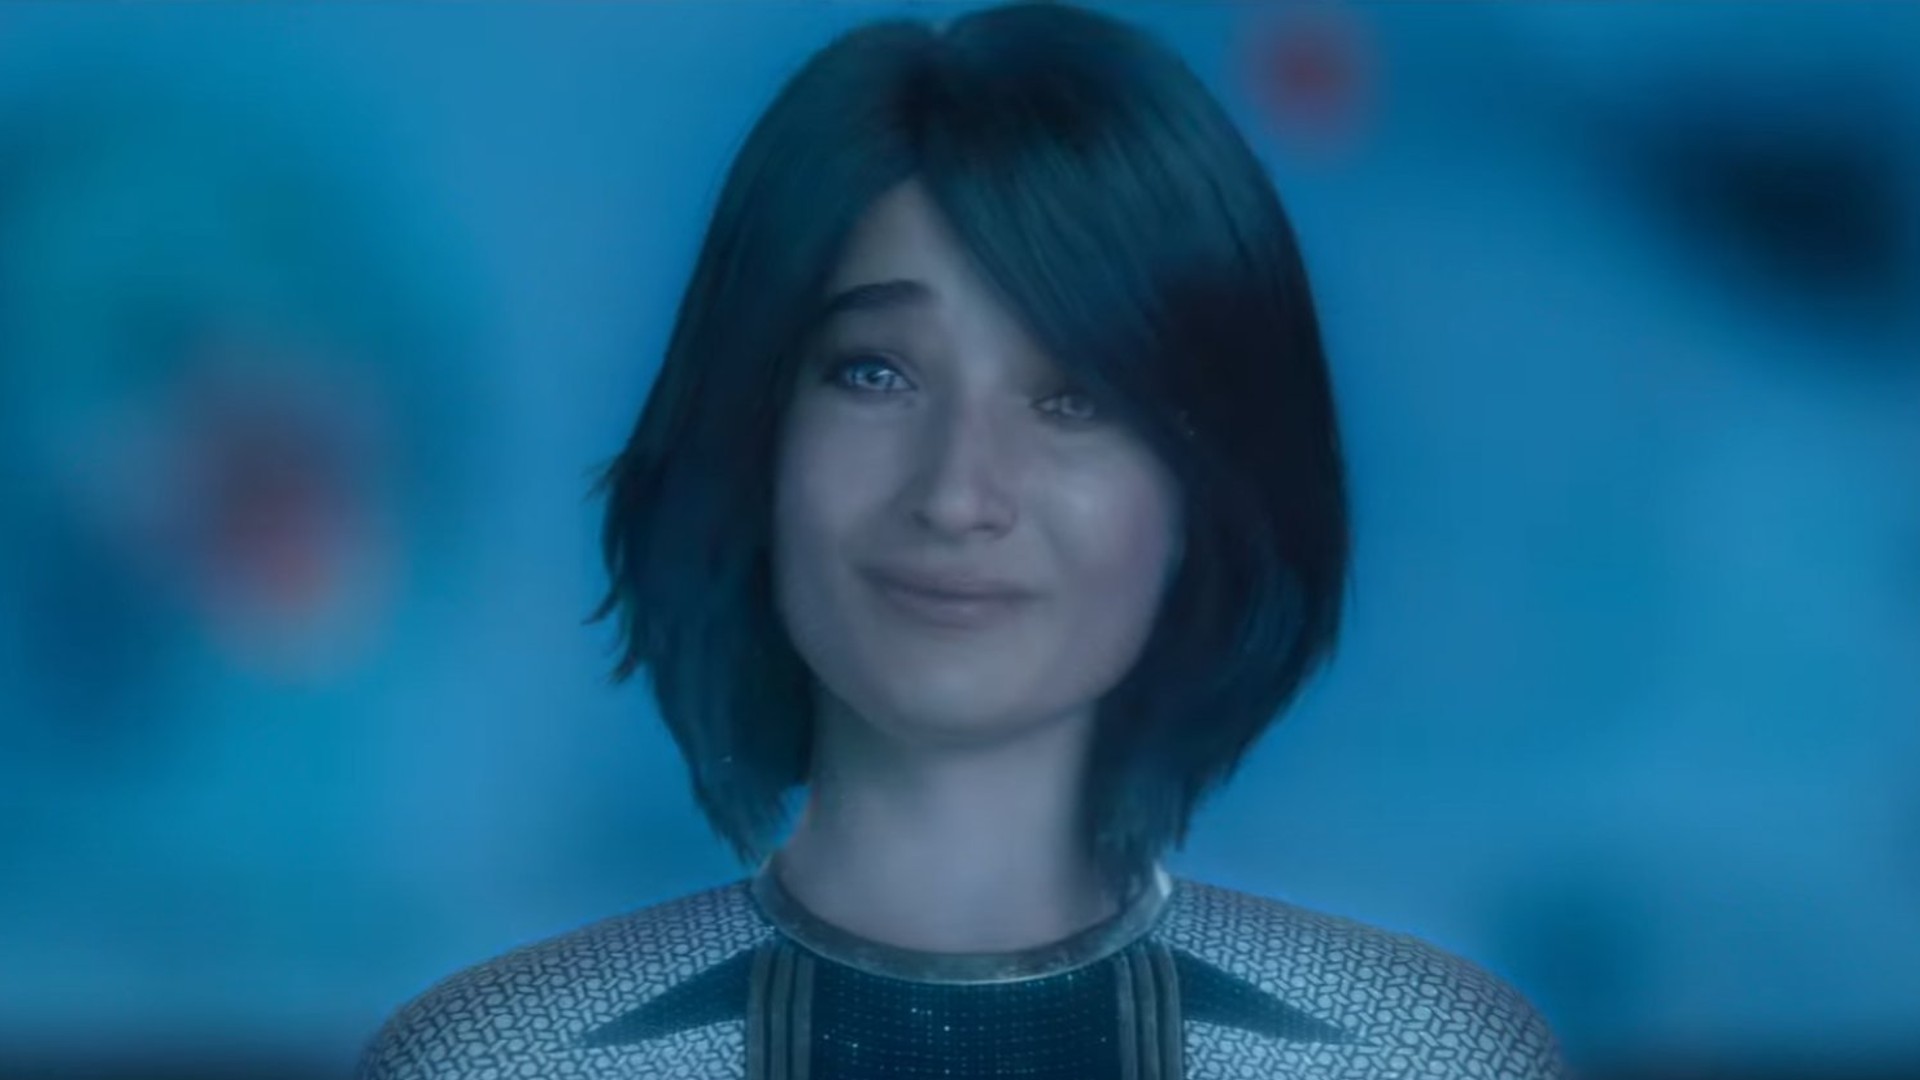 Halo serisindeki Cortana